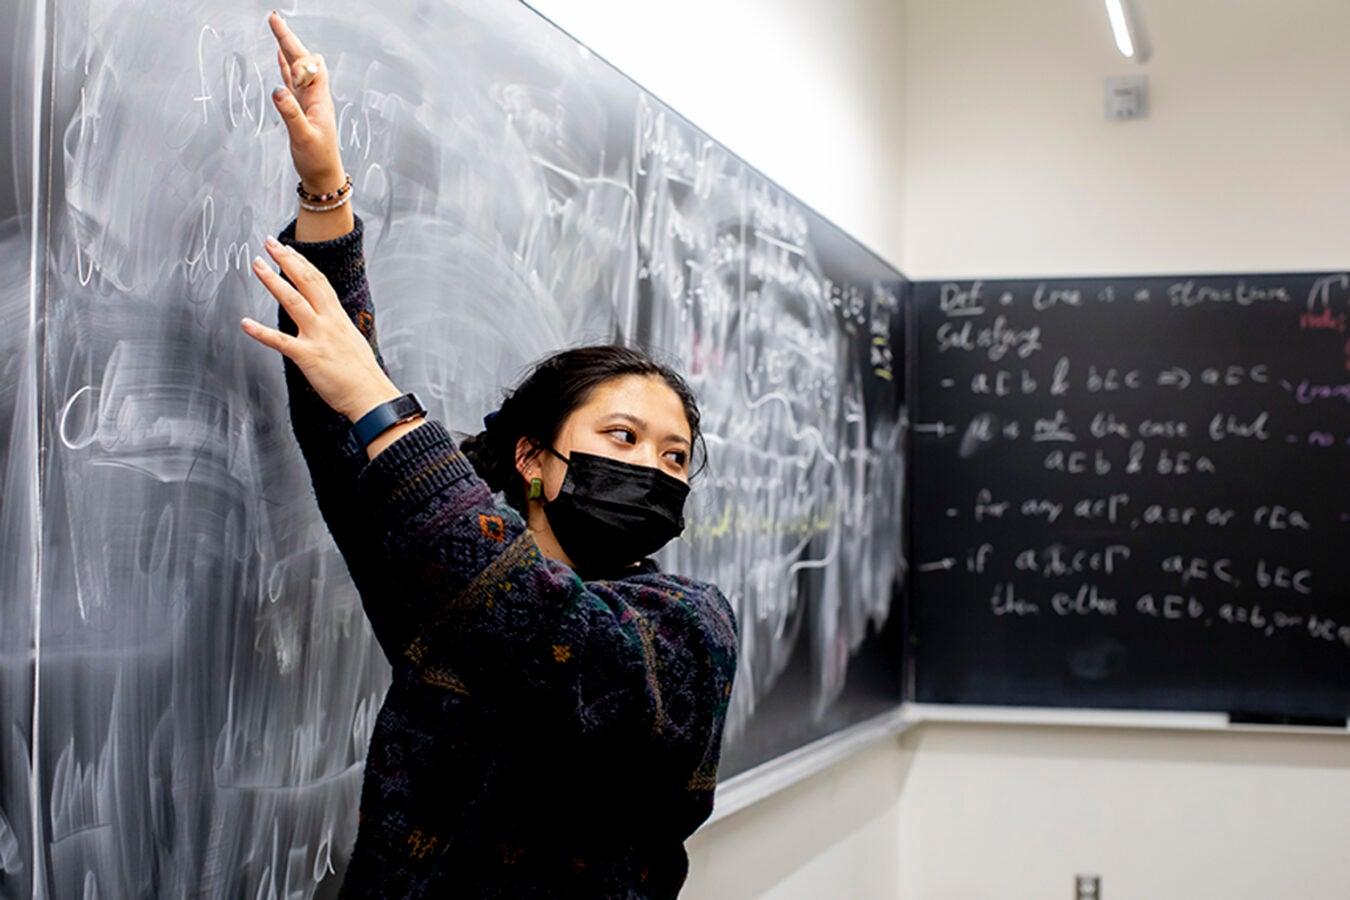 Jocelyn Wang uses chalkboard at Math Question Center.